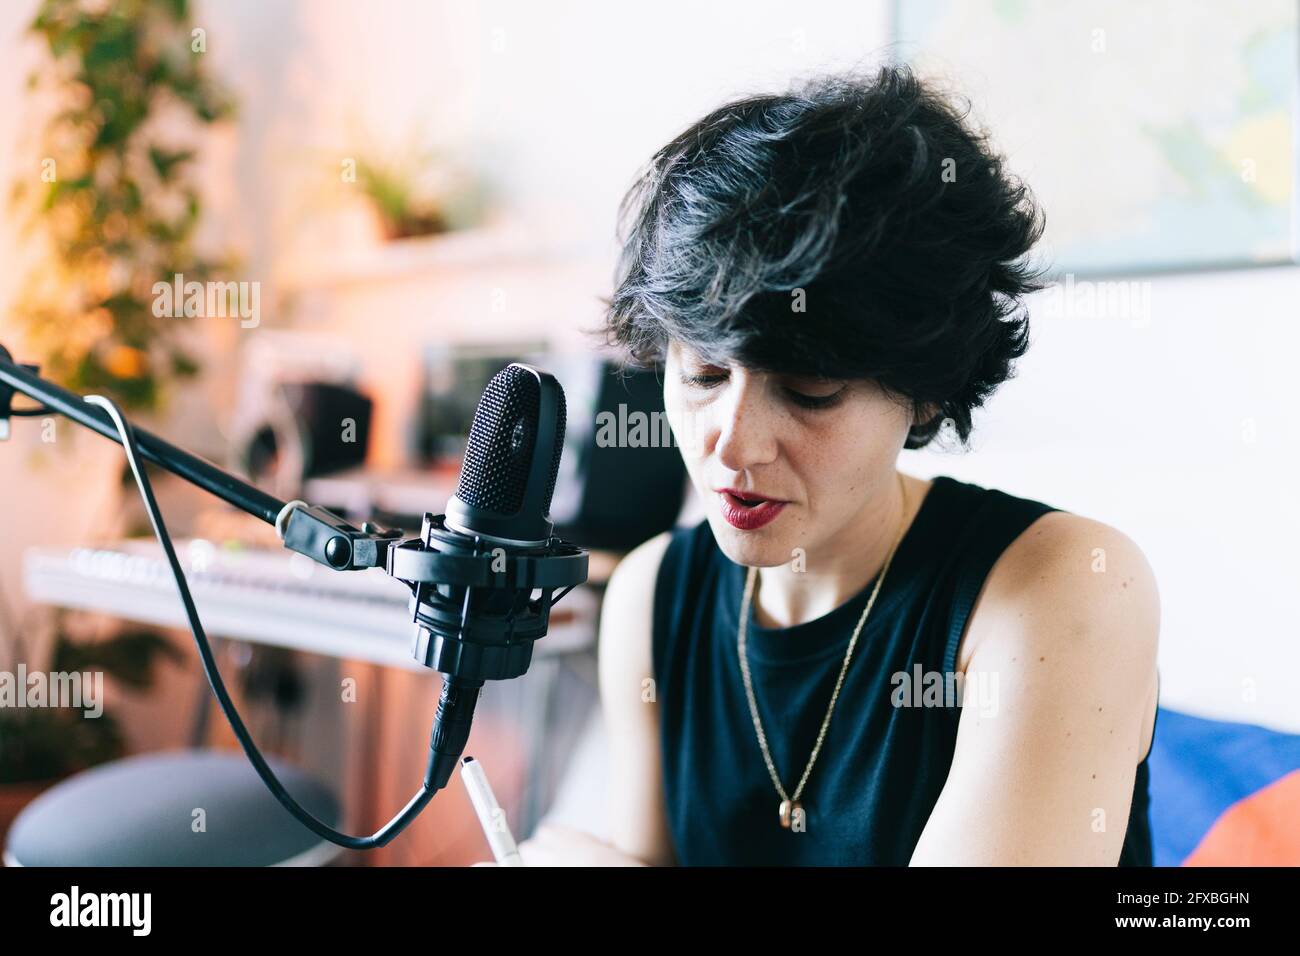 Female musician singing while recording at studio Stock Photo